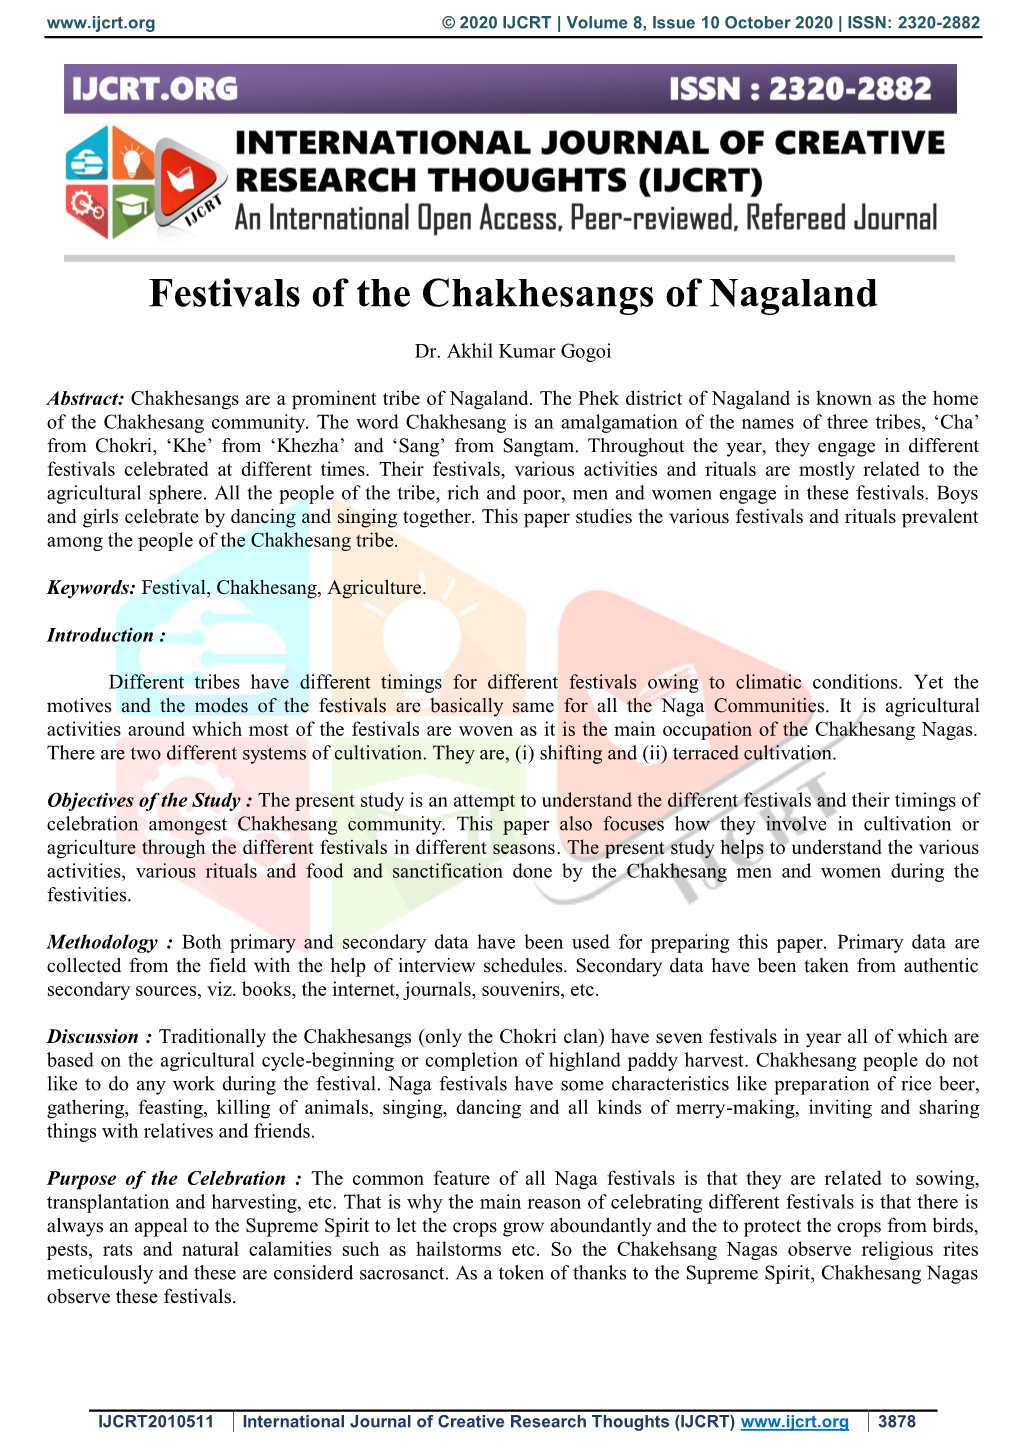 Festivals of the Chakhesangs of Nagaland